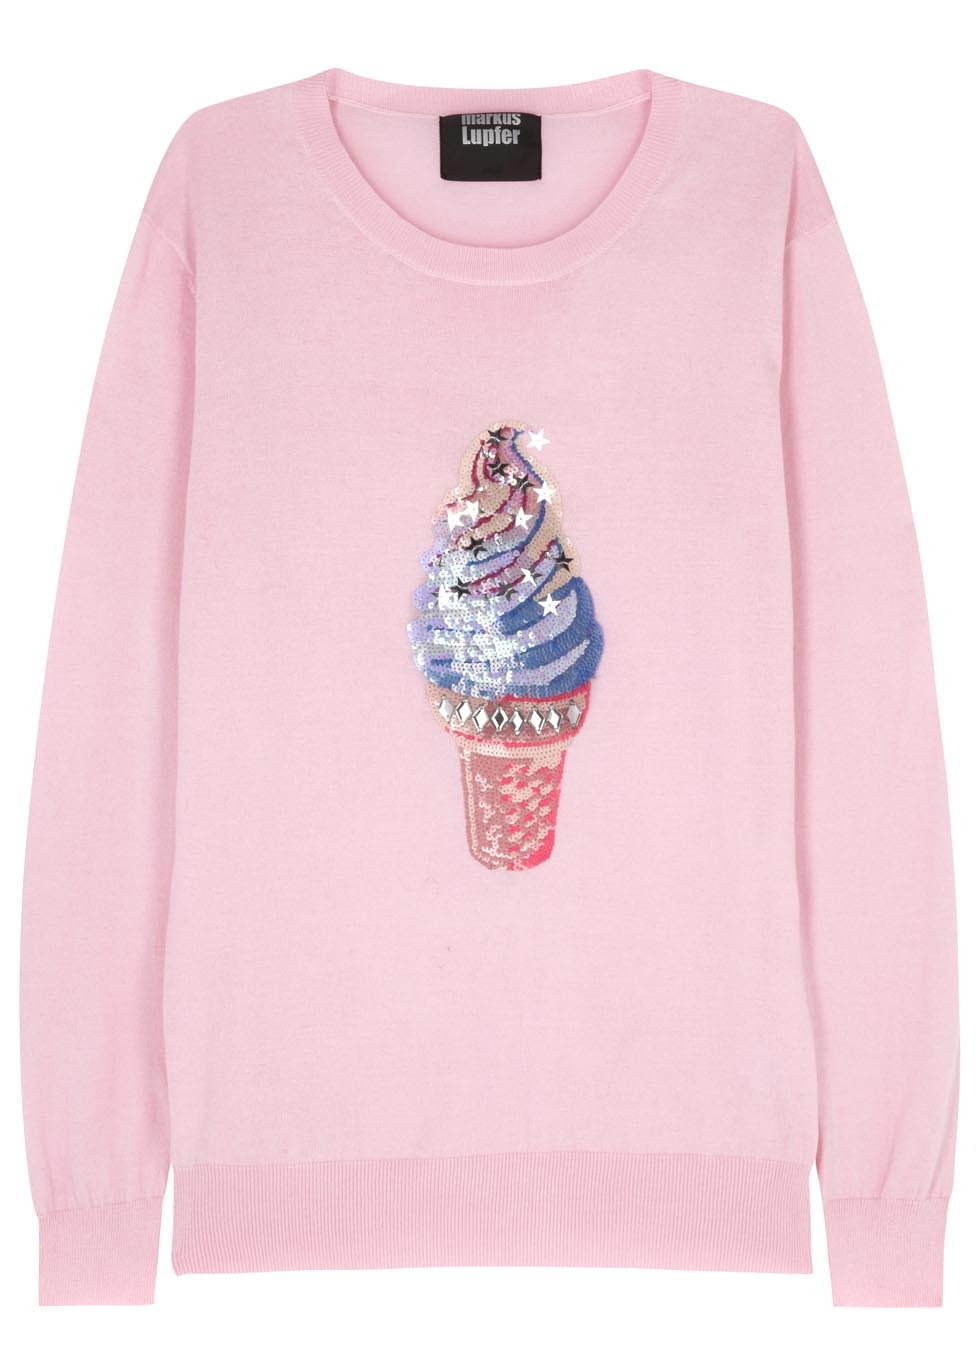 Markus lupfer Sequin Ice-Cream Sweater in Pink | Lyst